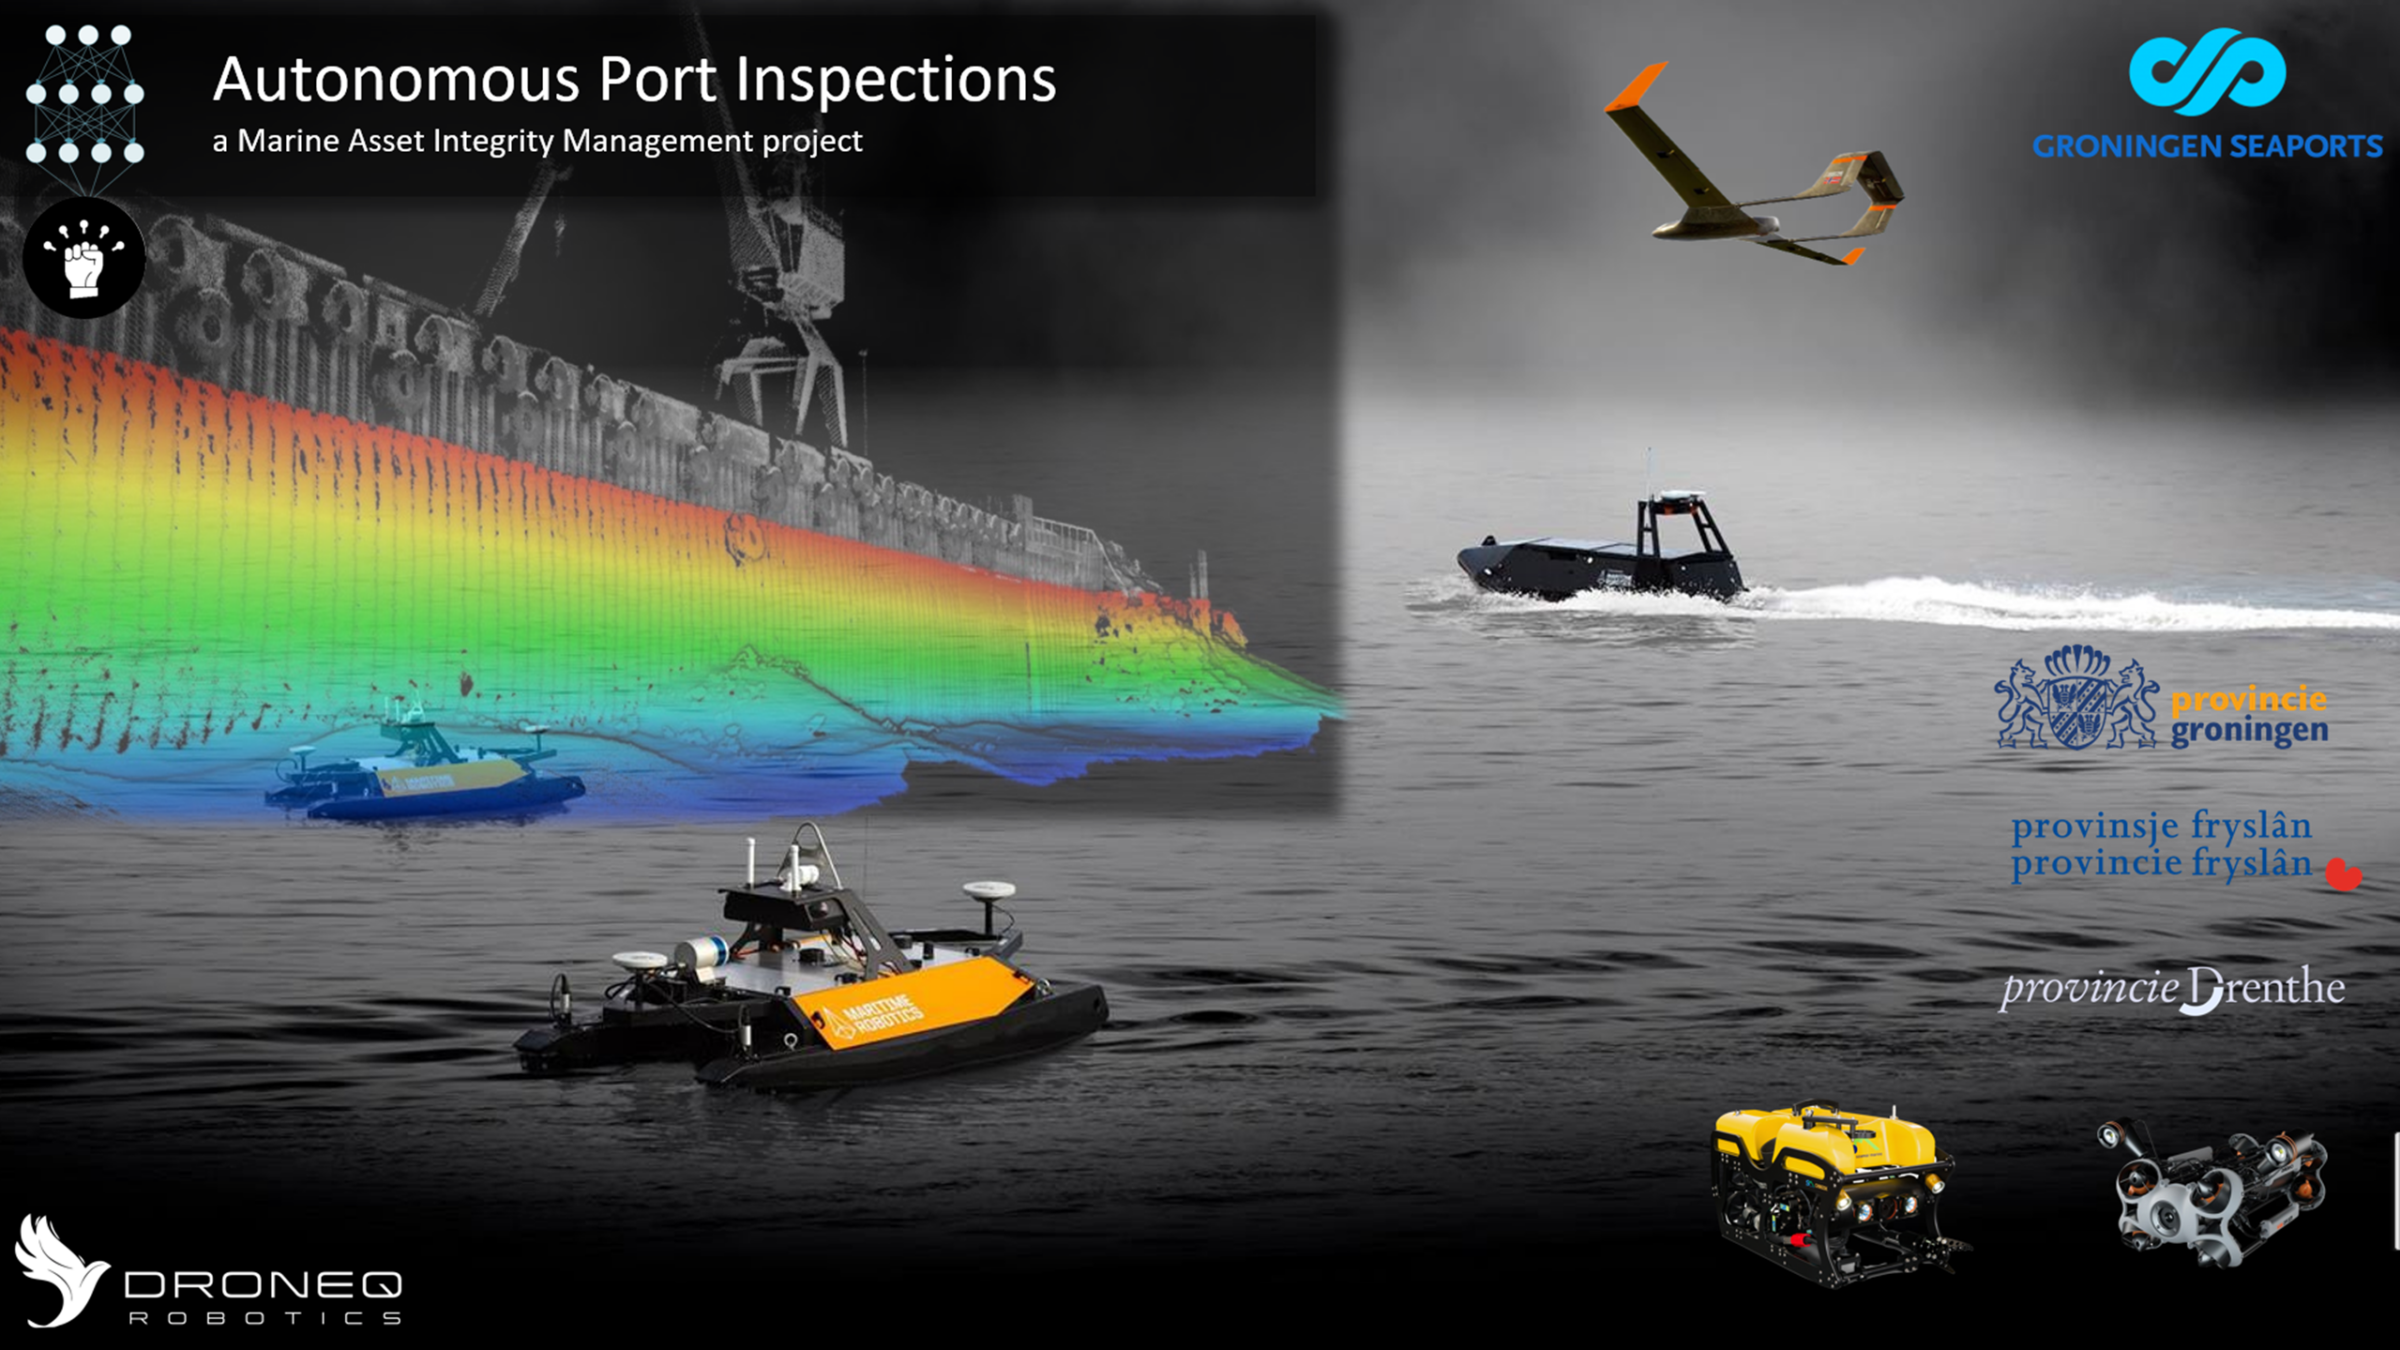 Award tender autonomous port inspection of Groningen Seaports